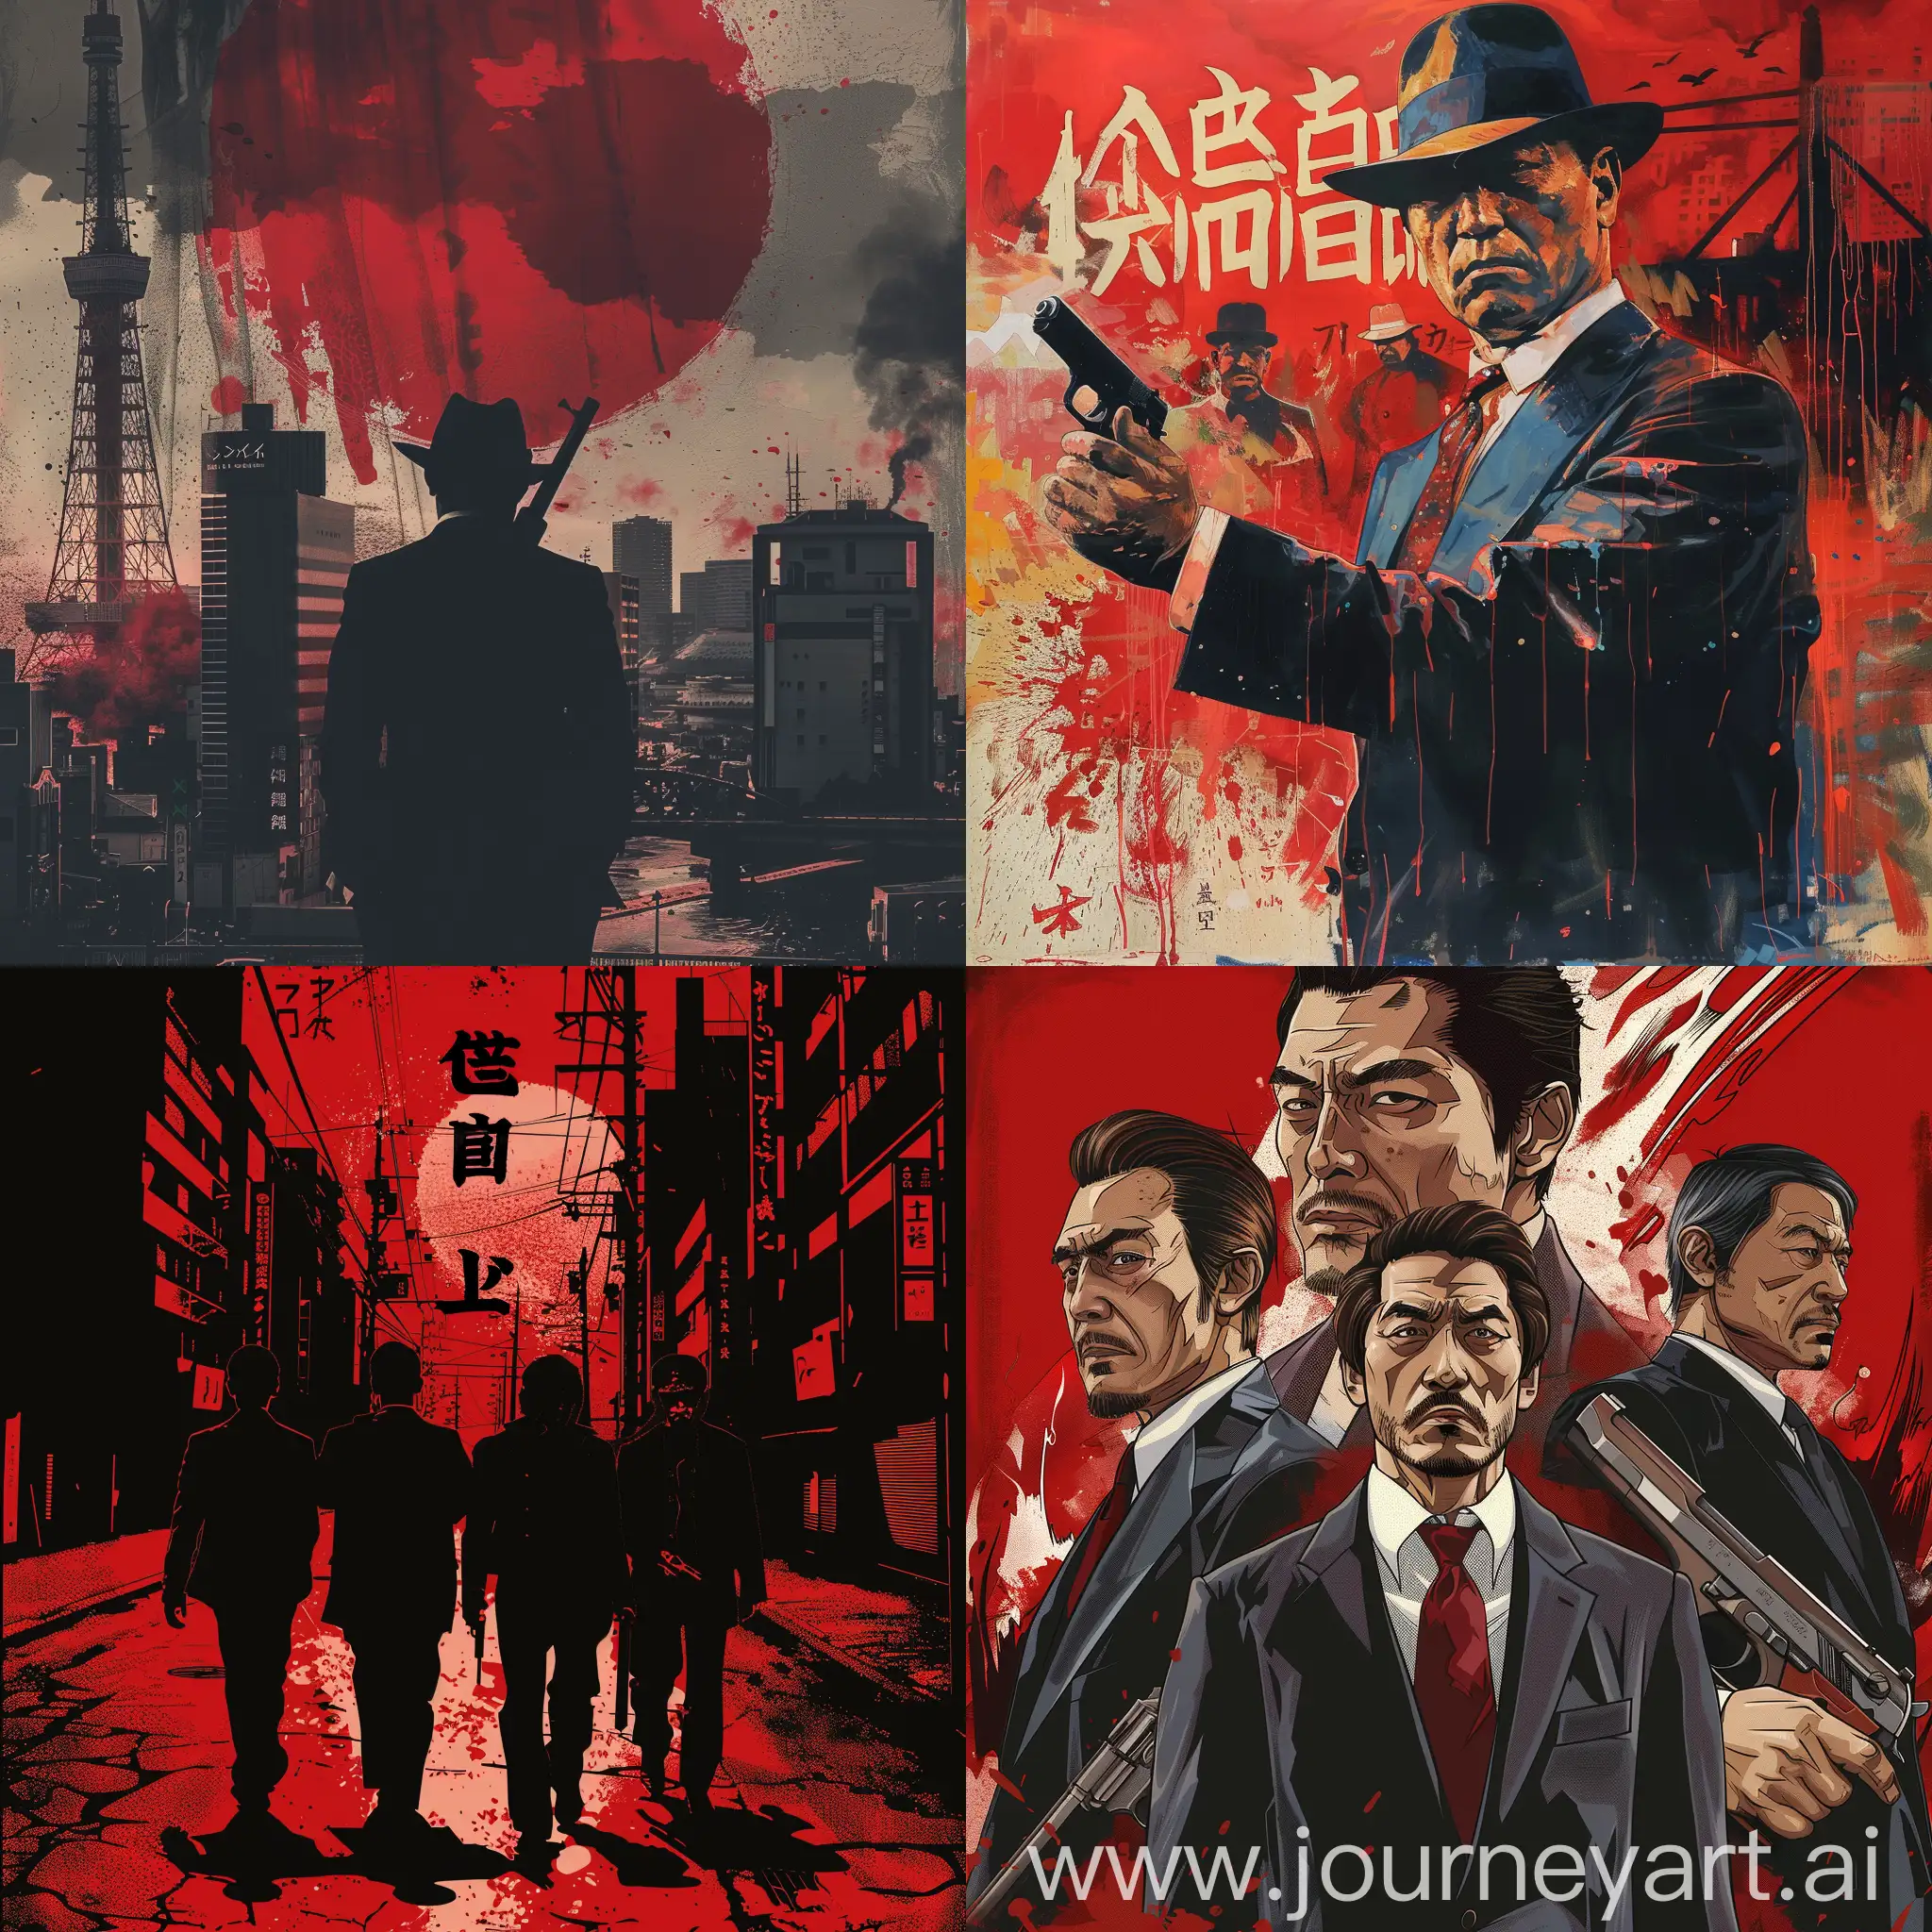 Japanese-Mafia-Boss-in-Urban-Setting